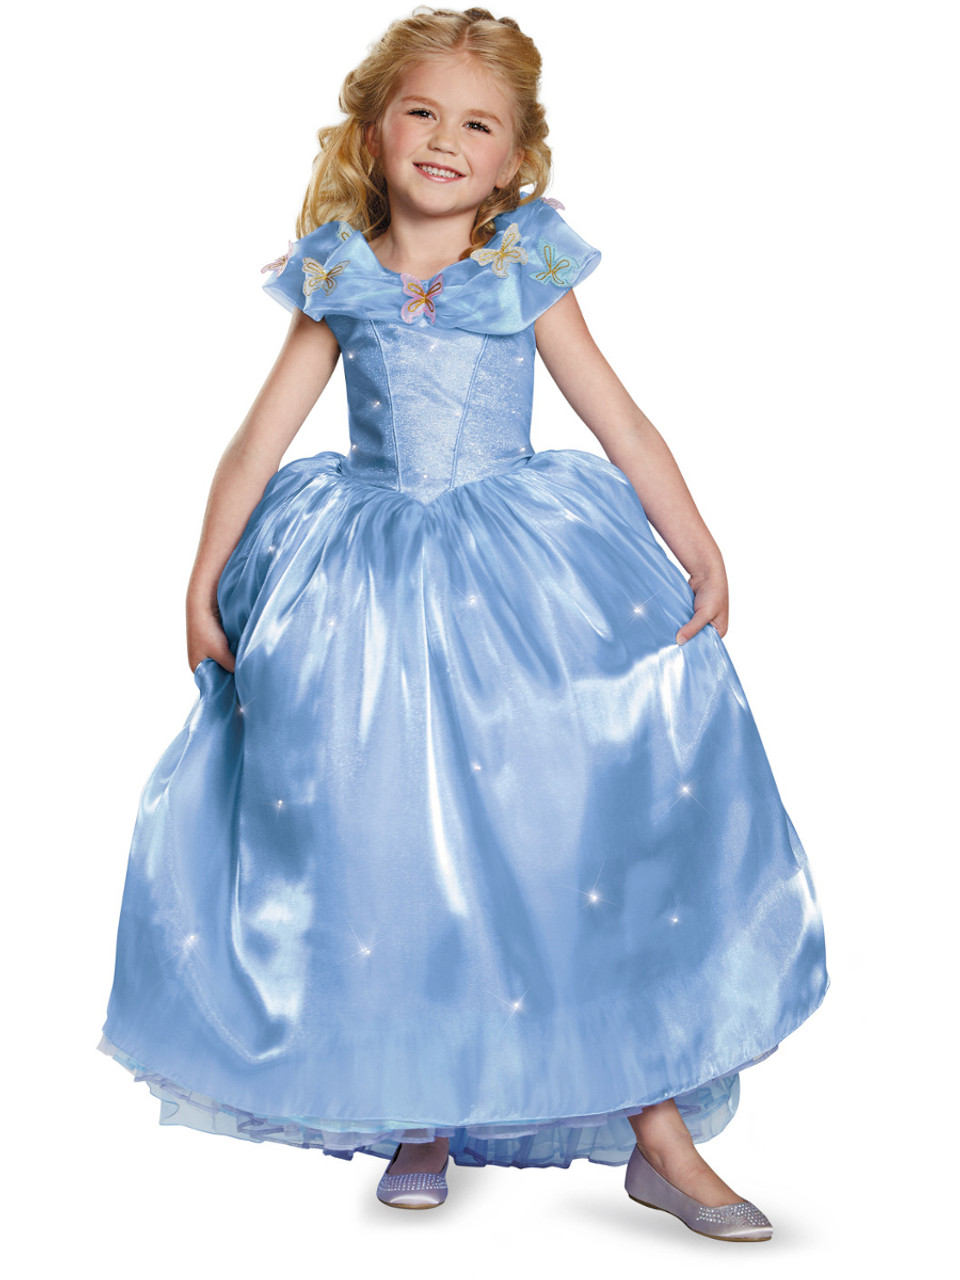 Cinderella Dress Girls Princess Costume Party Dress Up Bitrhday Cosplay  Gifts | eBay